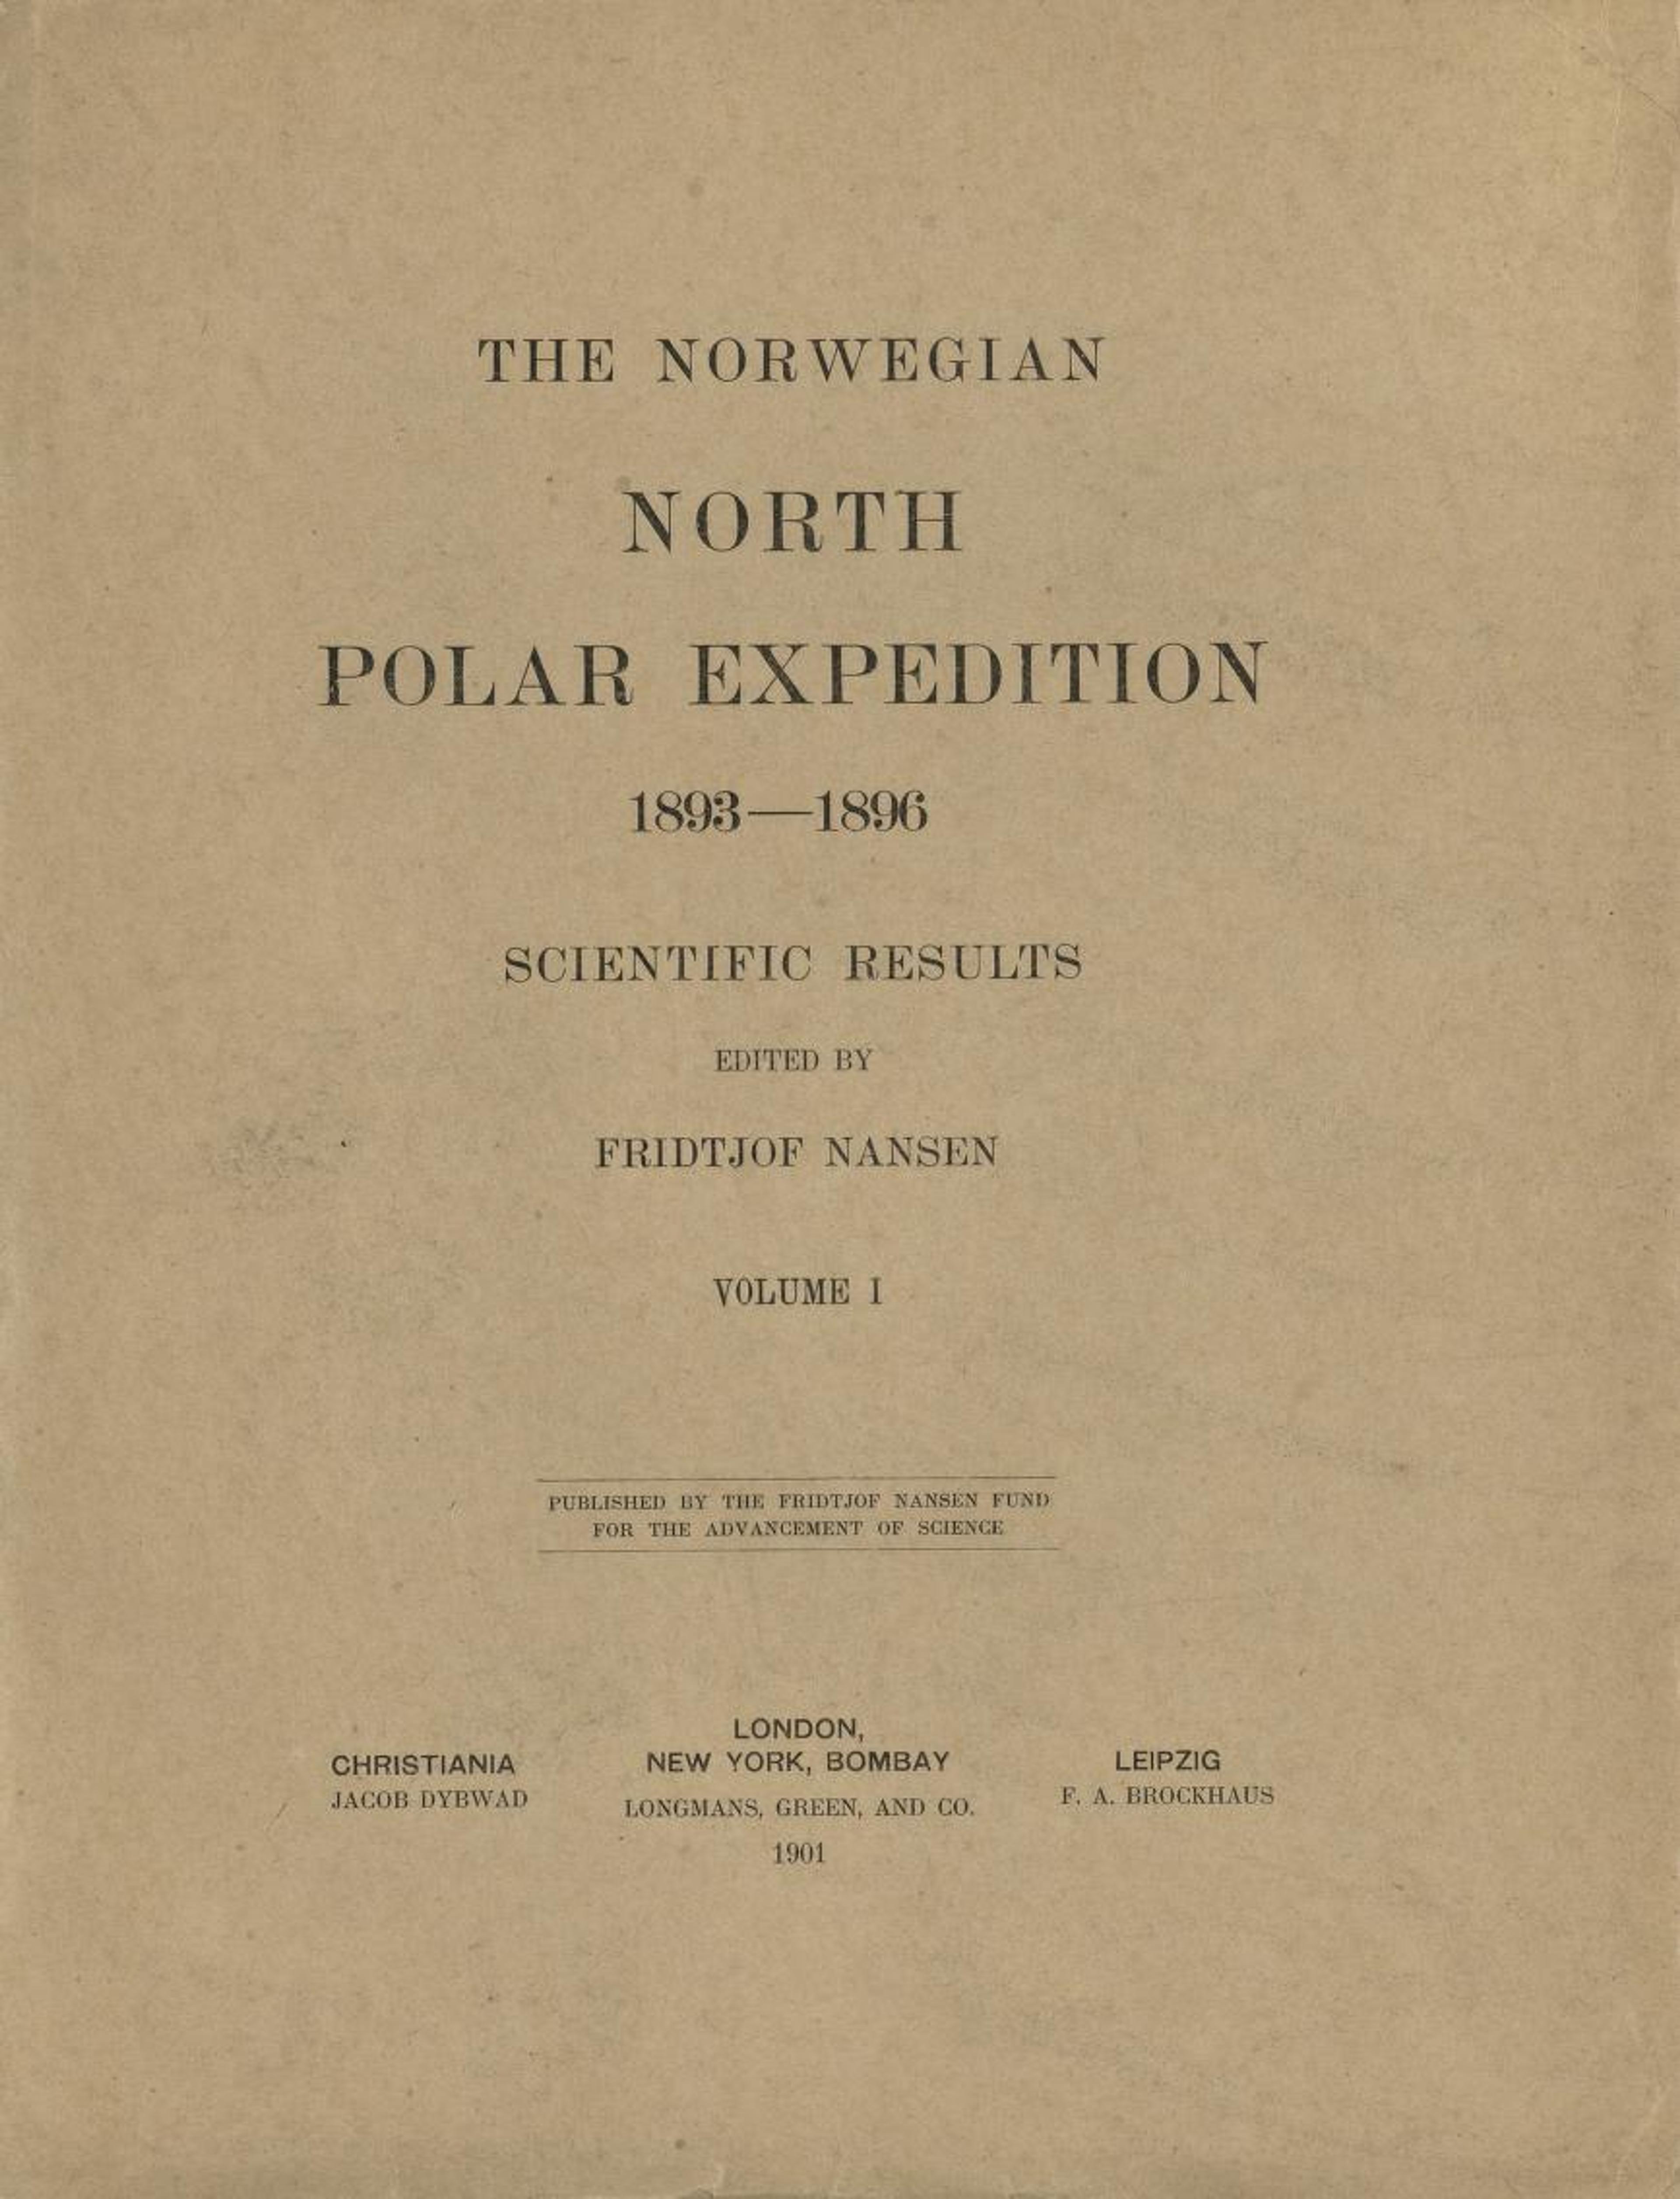 Scientific results : the Norwegian North Polar Expedition 1893-1896. Vol. 1 : [1-5]